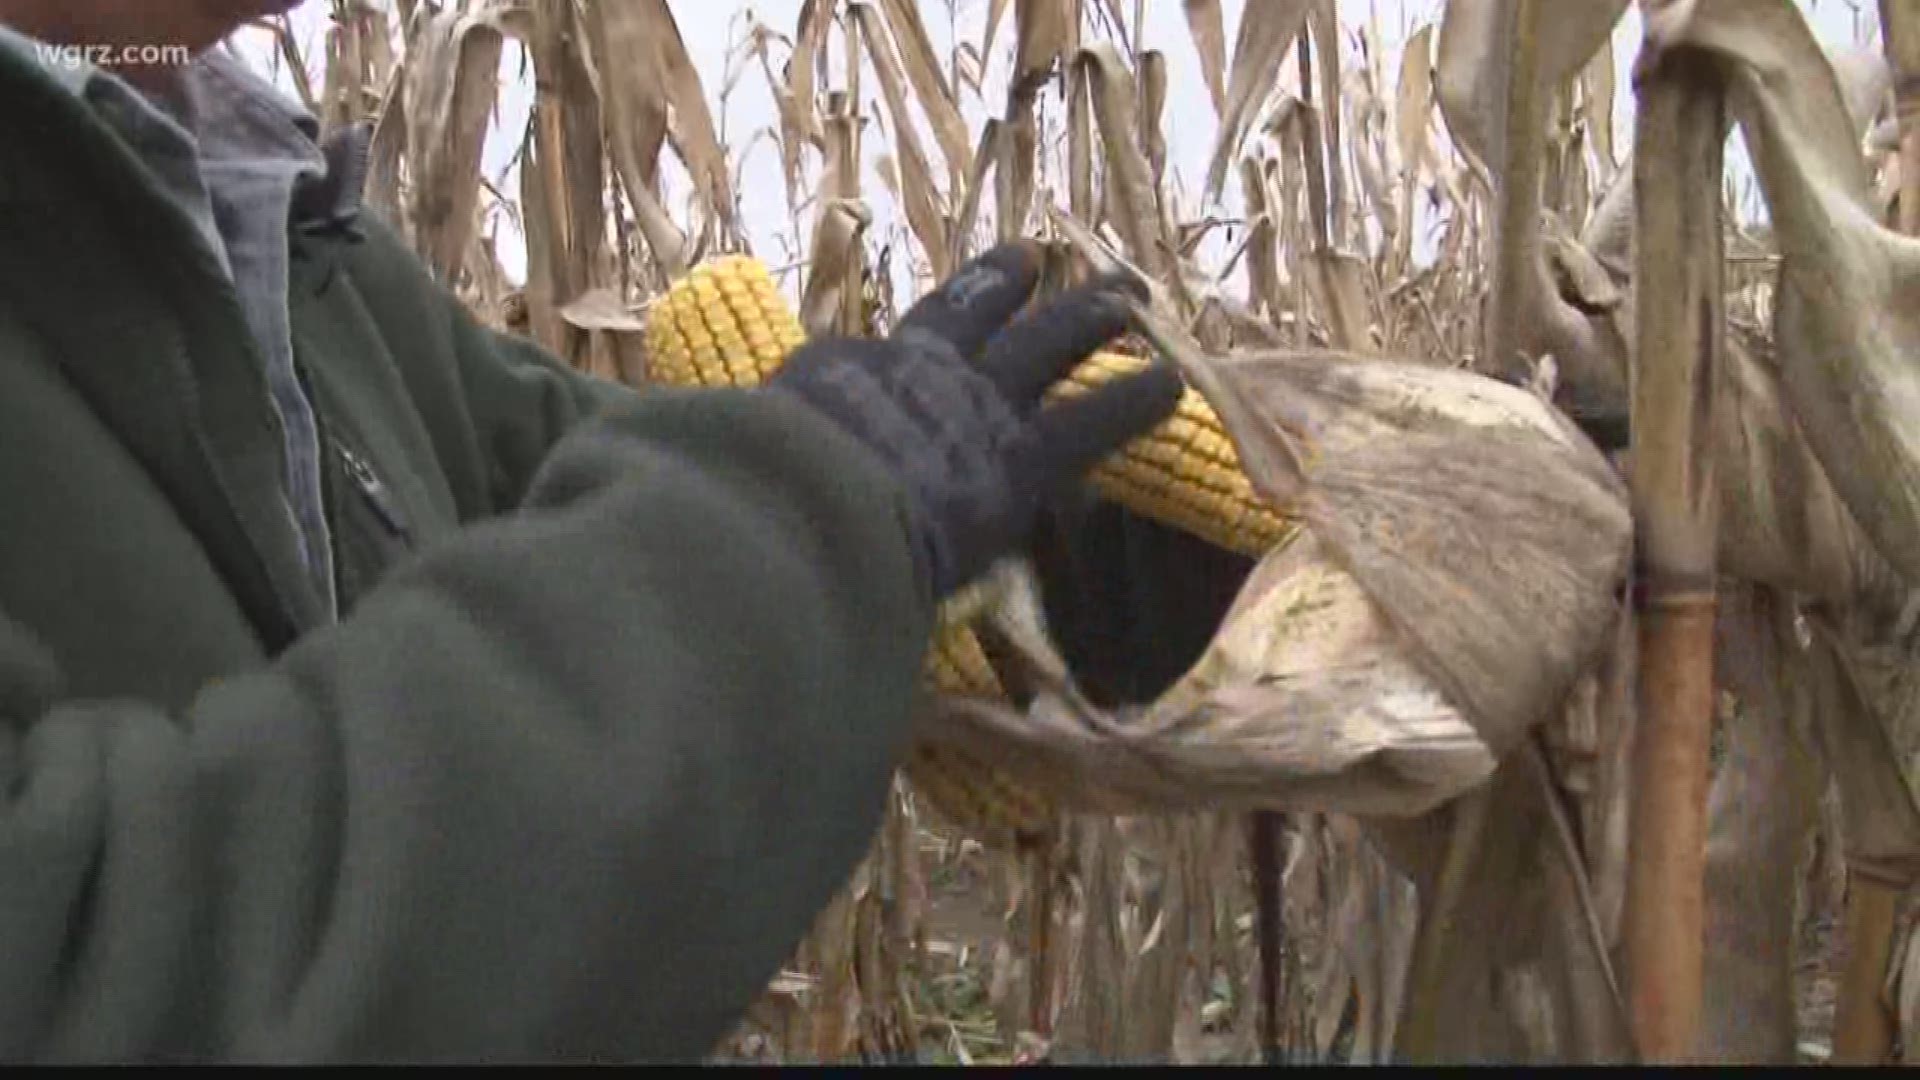 Highest Corn Stalks In Years